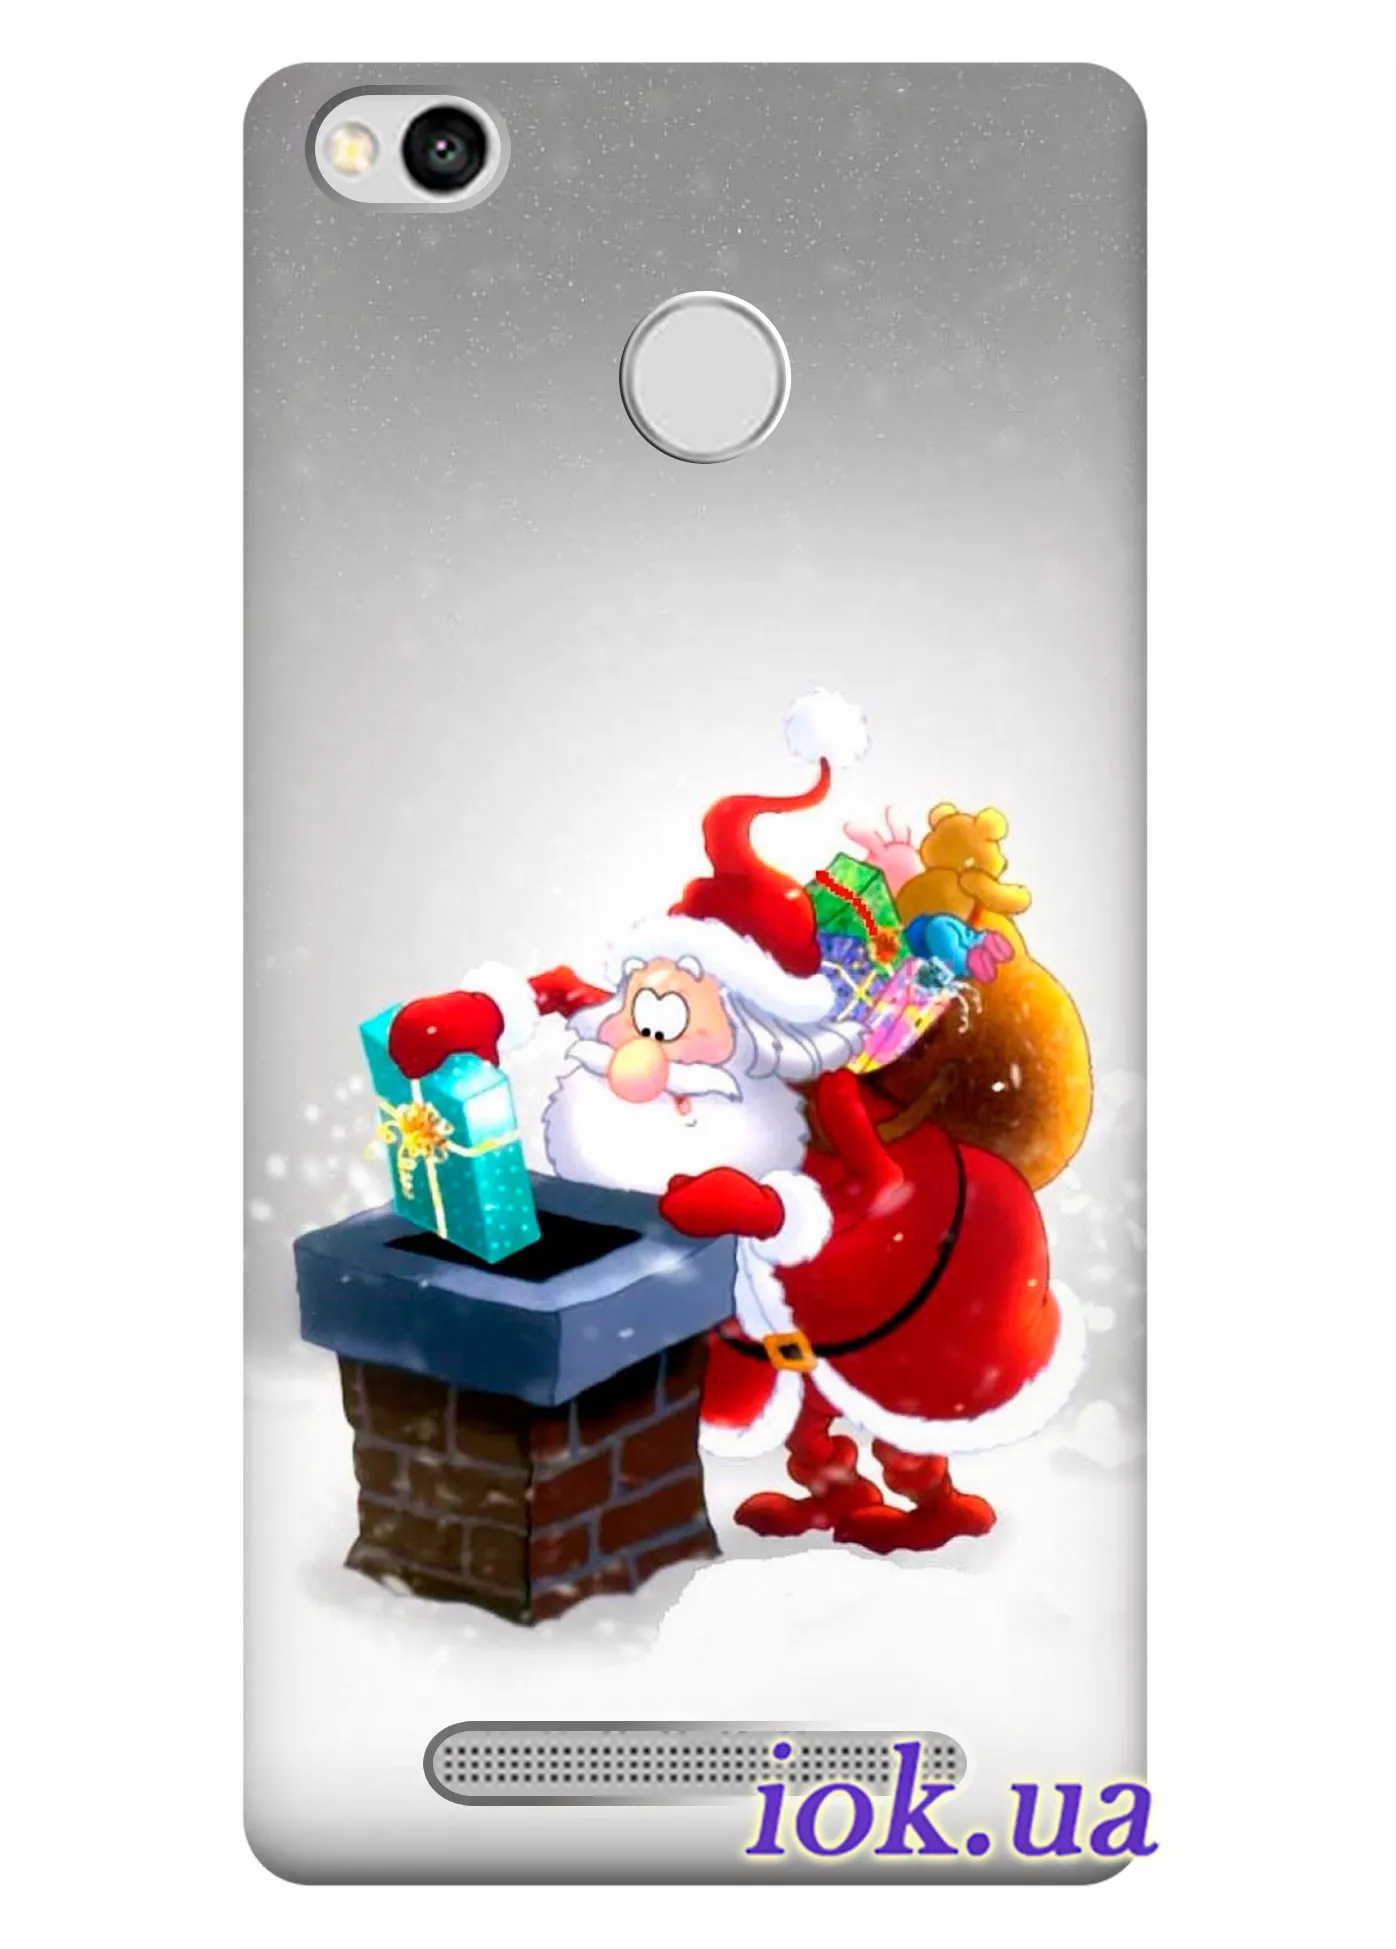 Чехол для Xiaomi Redmi 3 Pro - Дед мороз с подарками